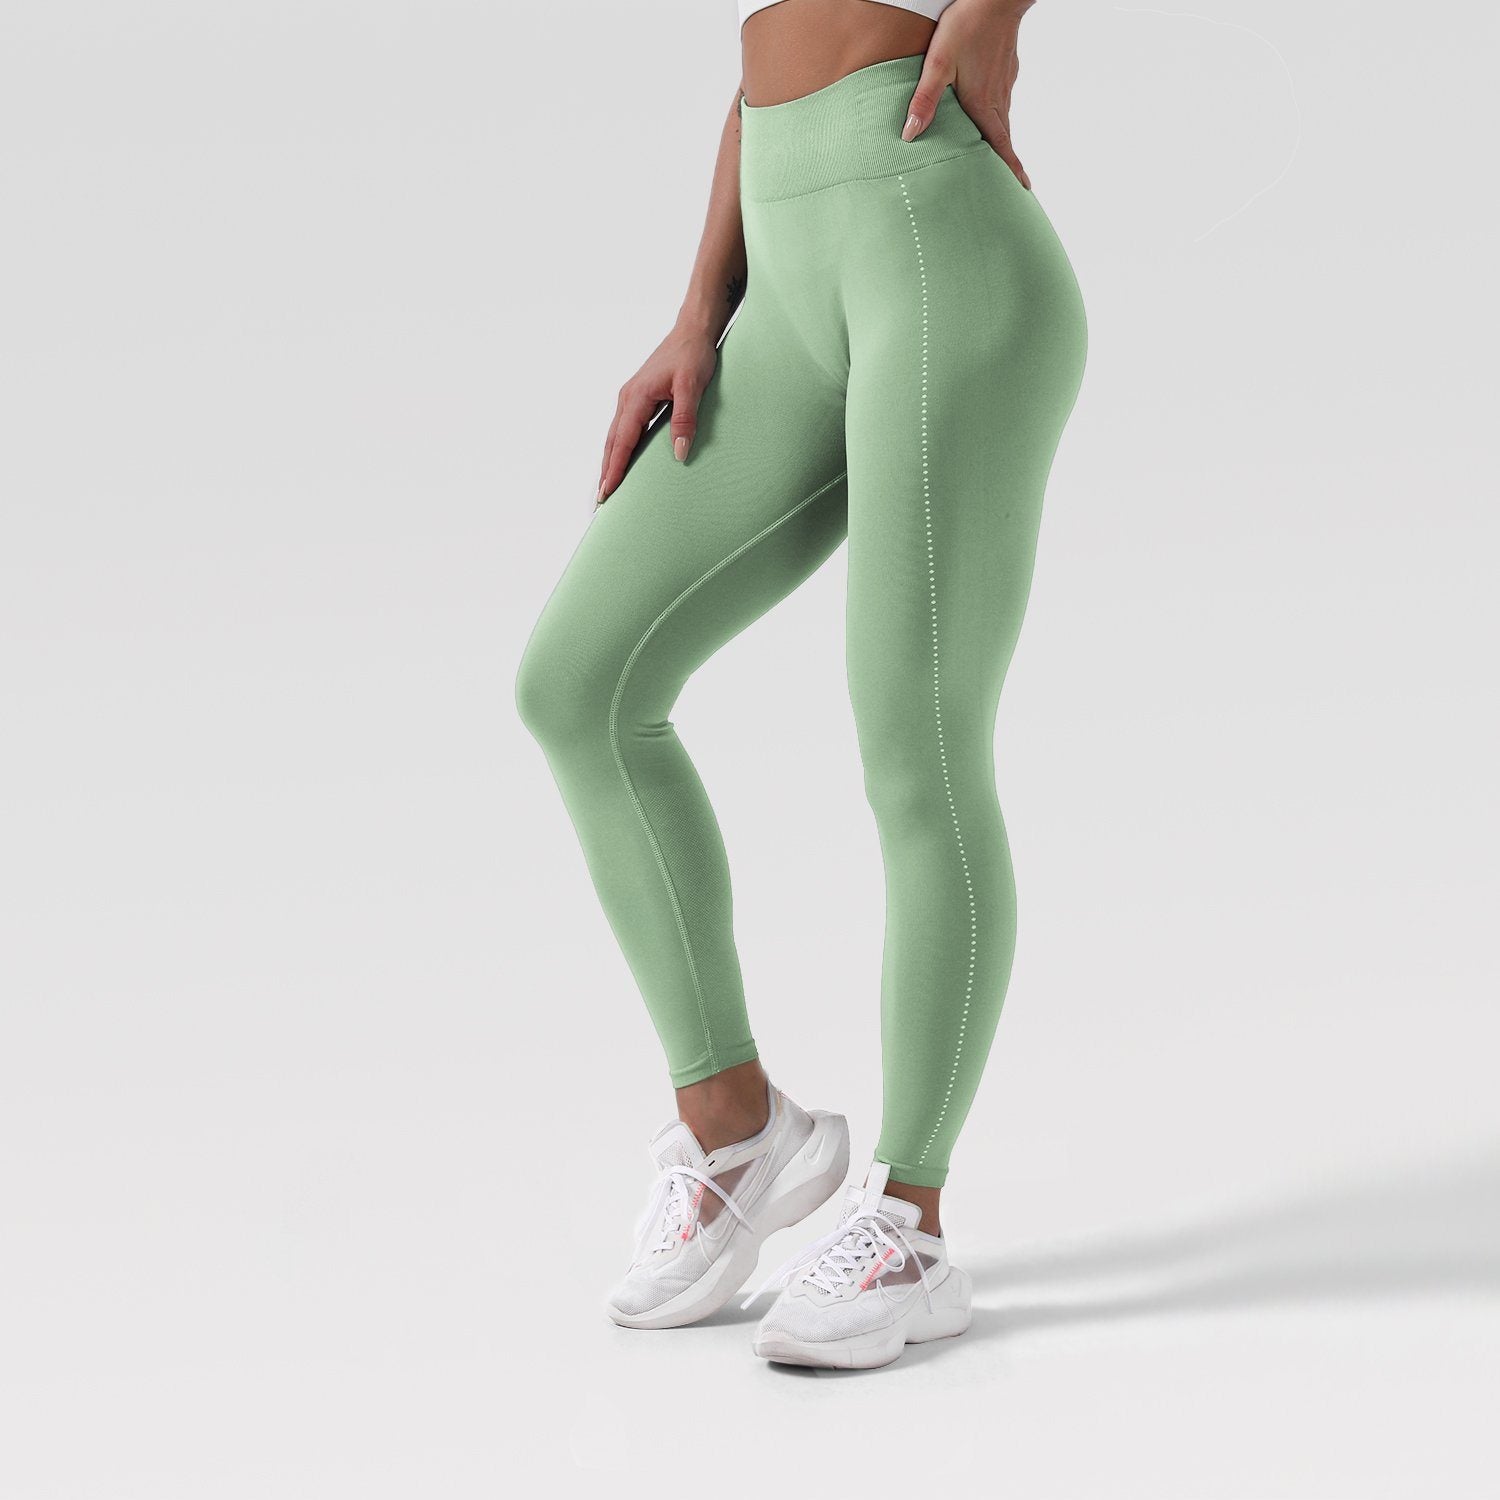 Smooth Yoga Leggings Yoga Pants Truetights Light green S 